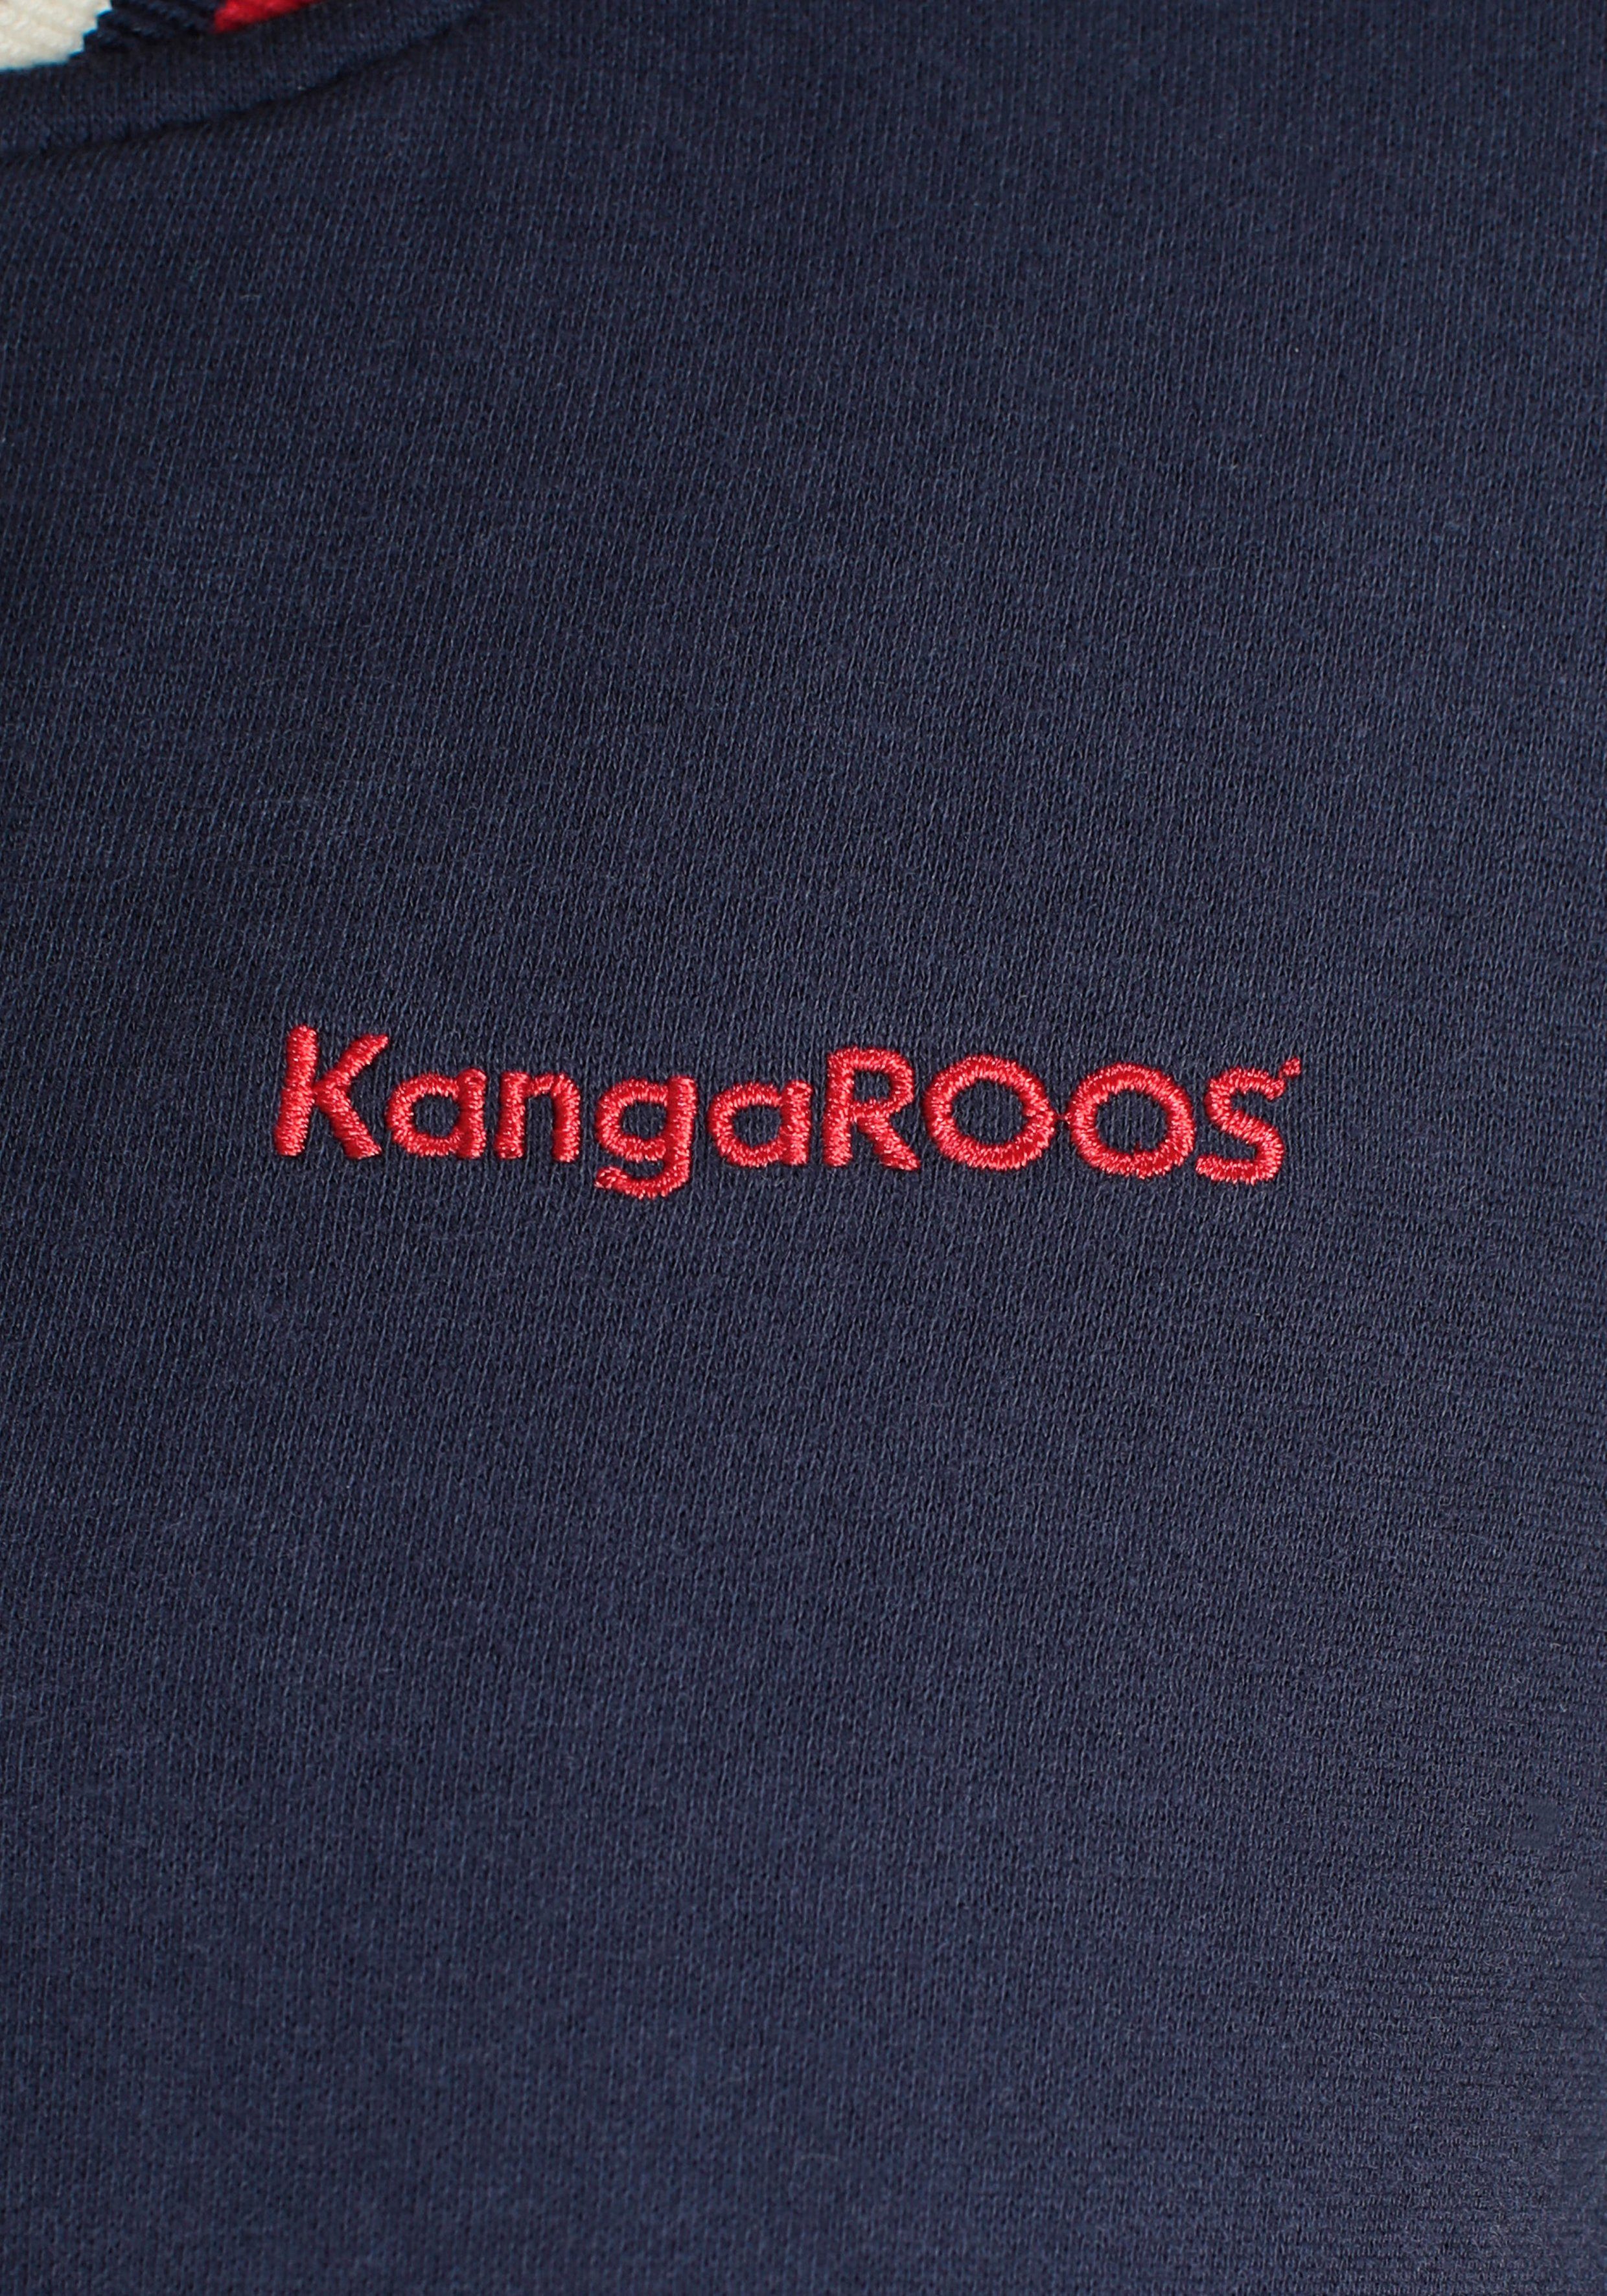 coolen KangaROOS Sweatjacke KOLLEKTION College-Look im NEUE -